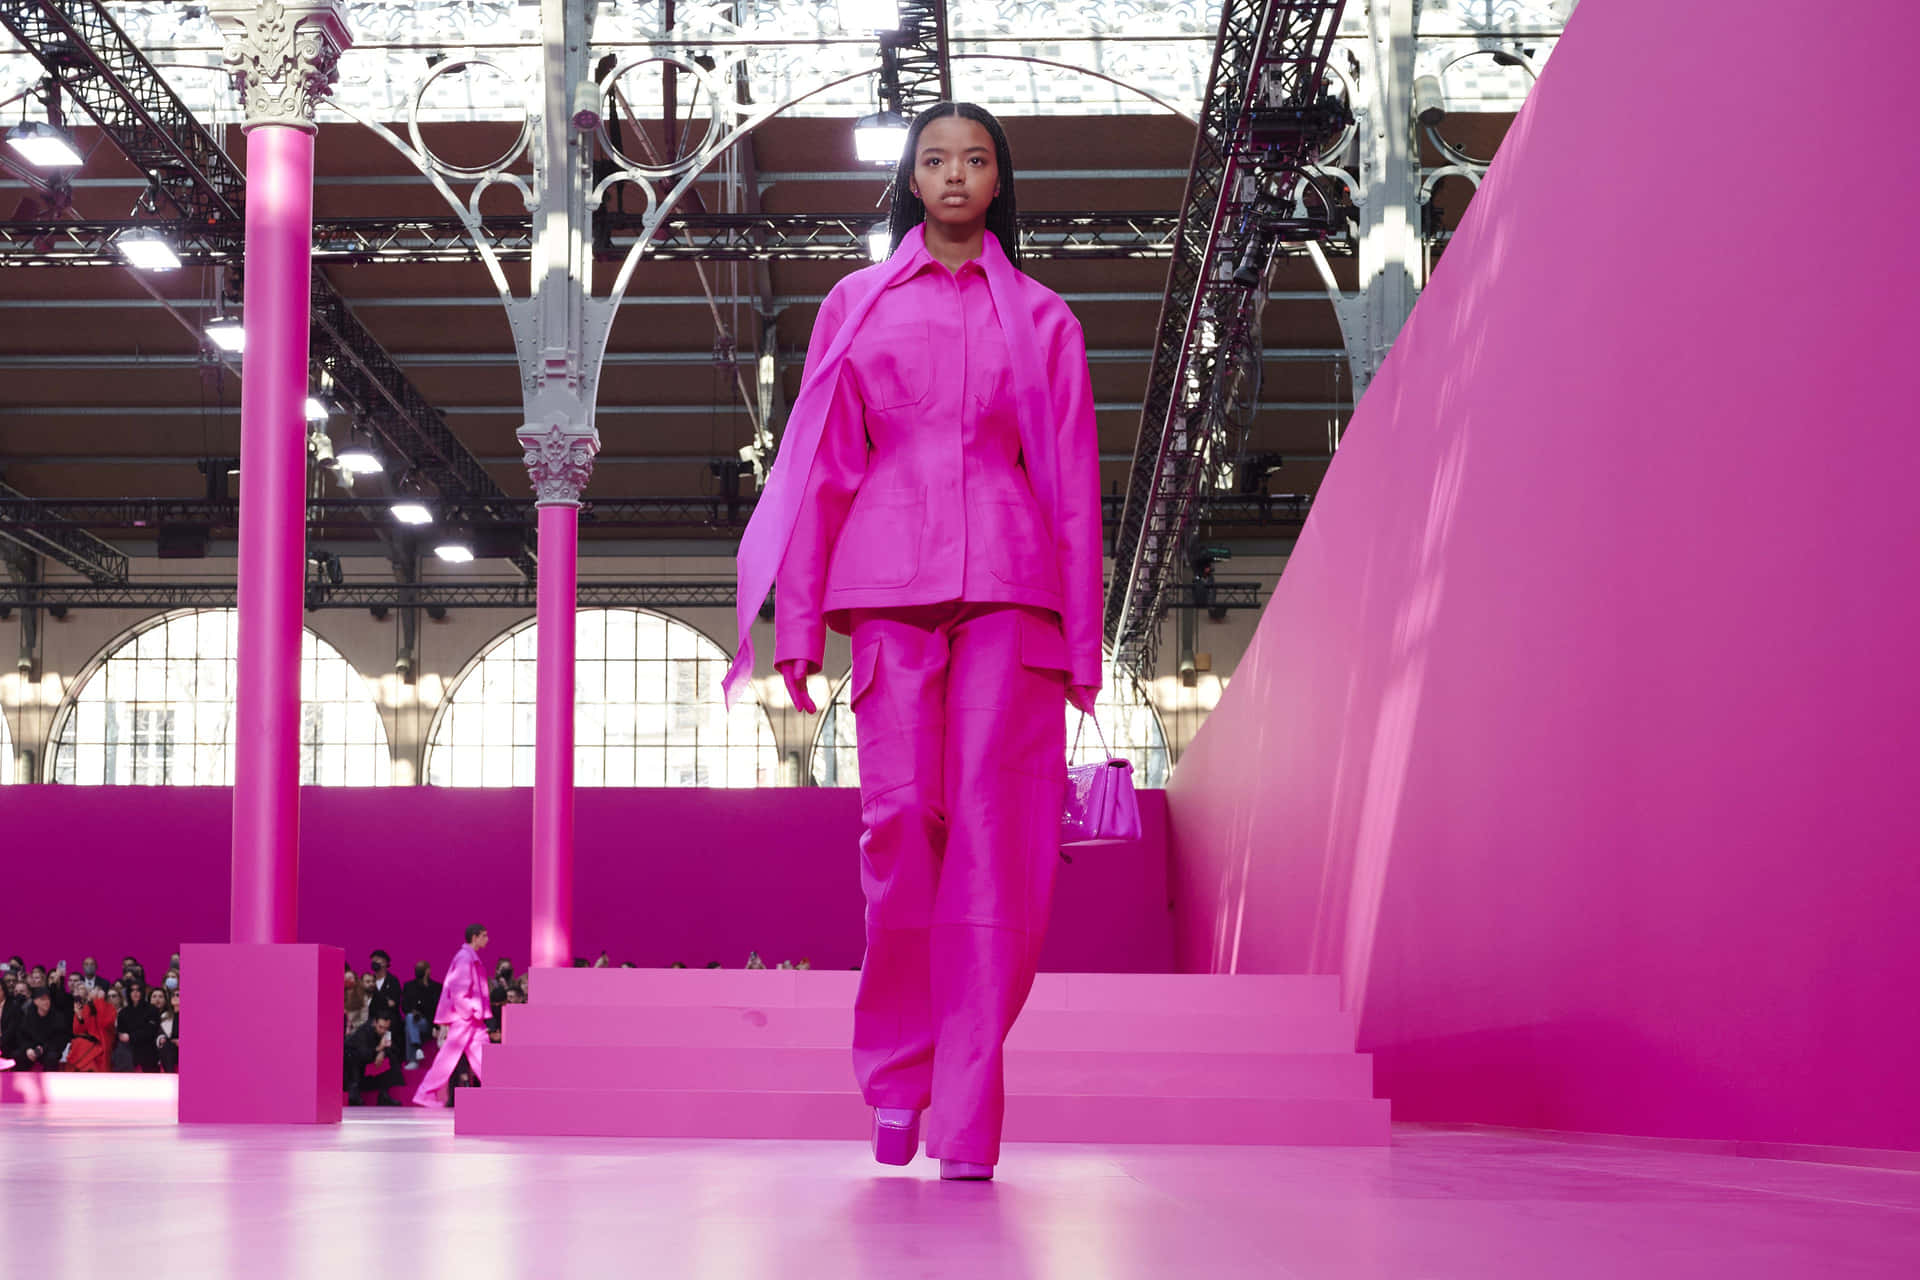 Showcasing an alluring pink ensemble in an elegant fashion photoshoot Wallpaper